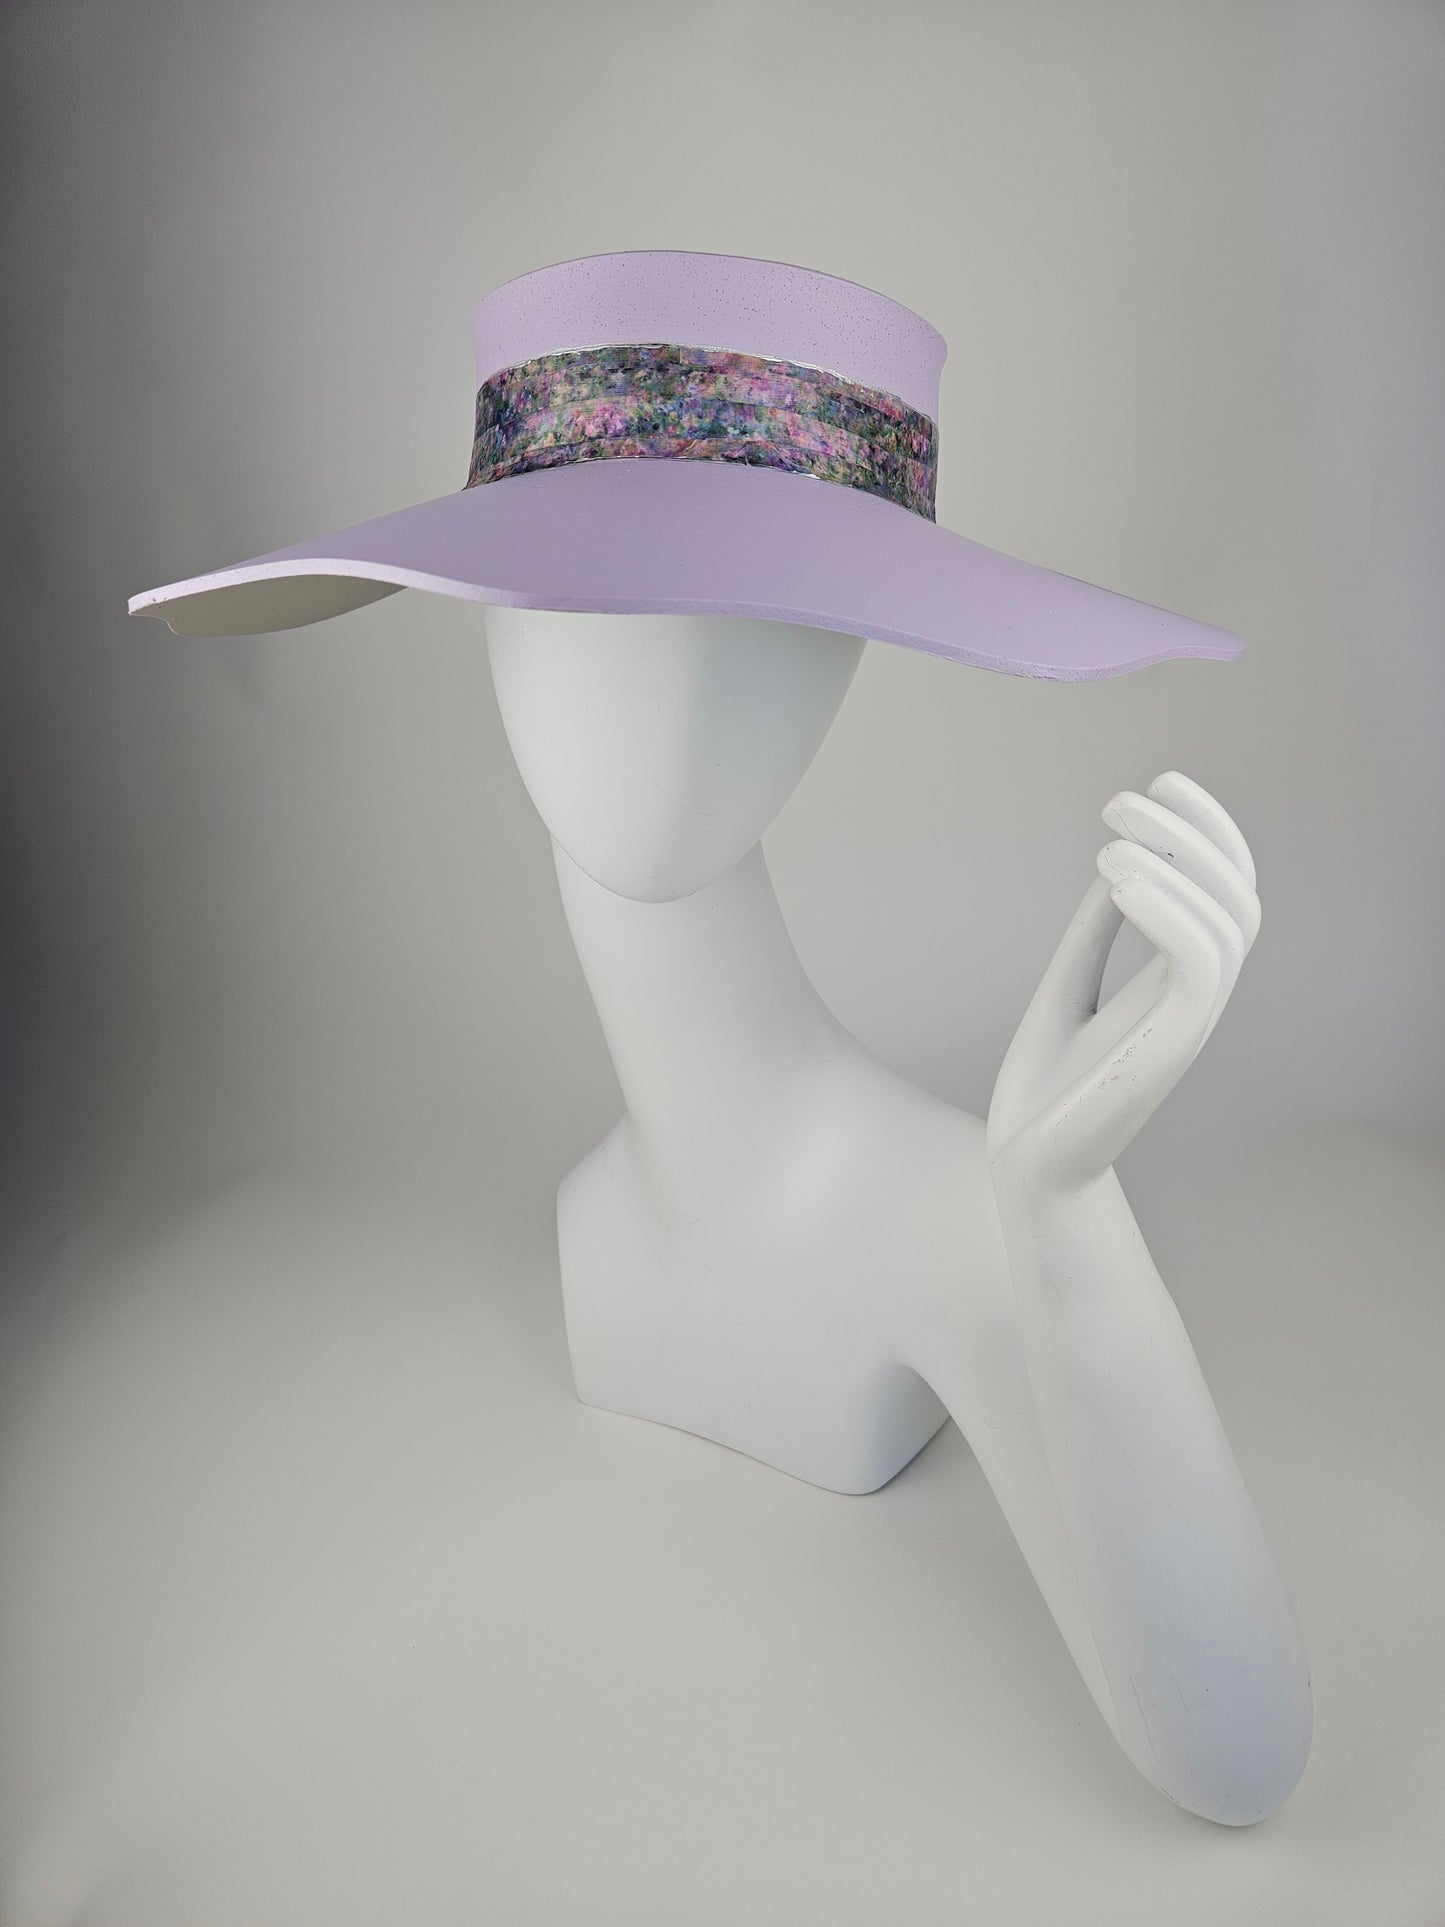 Lilac Purple Lotus Sun Visor Hat with Elegant Monet Style Floral Band and Silver Paint Splatter Effect: 1950s, Walks, Brunch, Asian, Golf, Summer, Church, No Headache, Pool, Beach